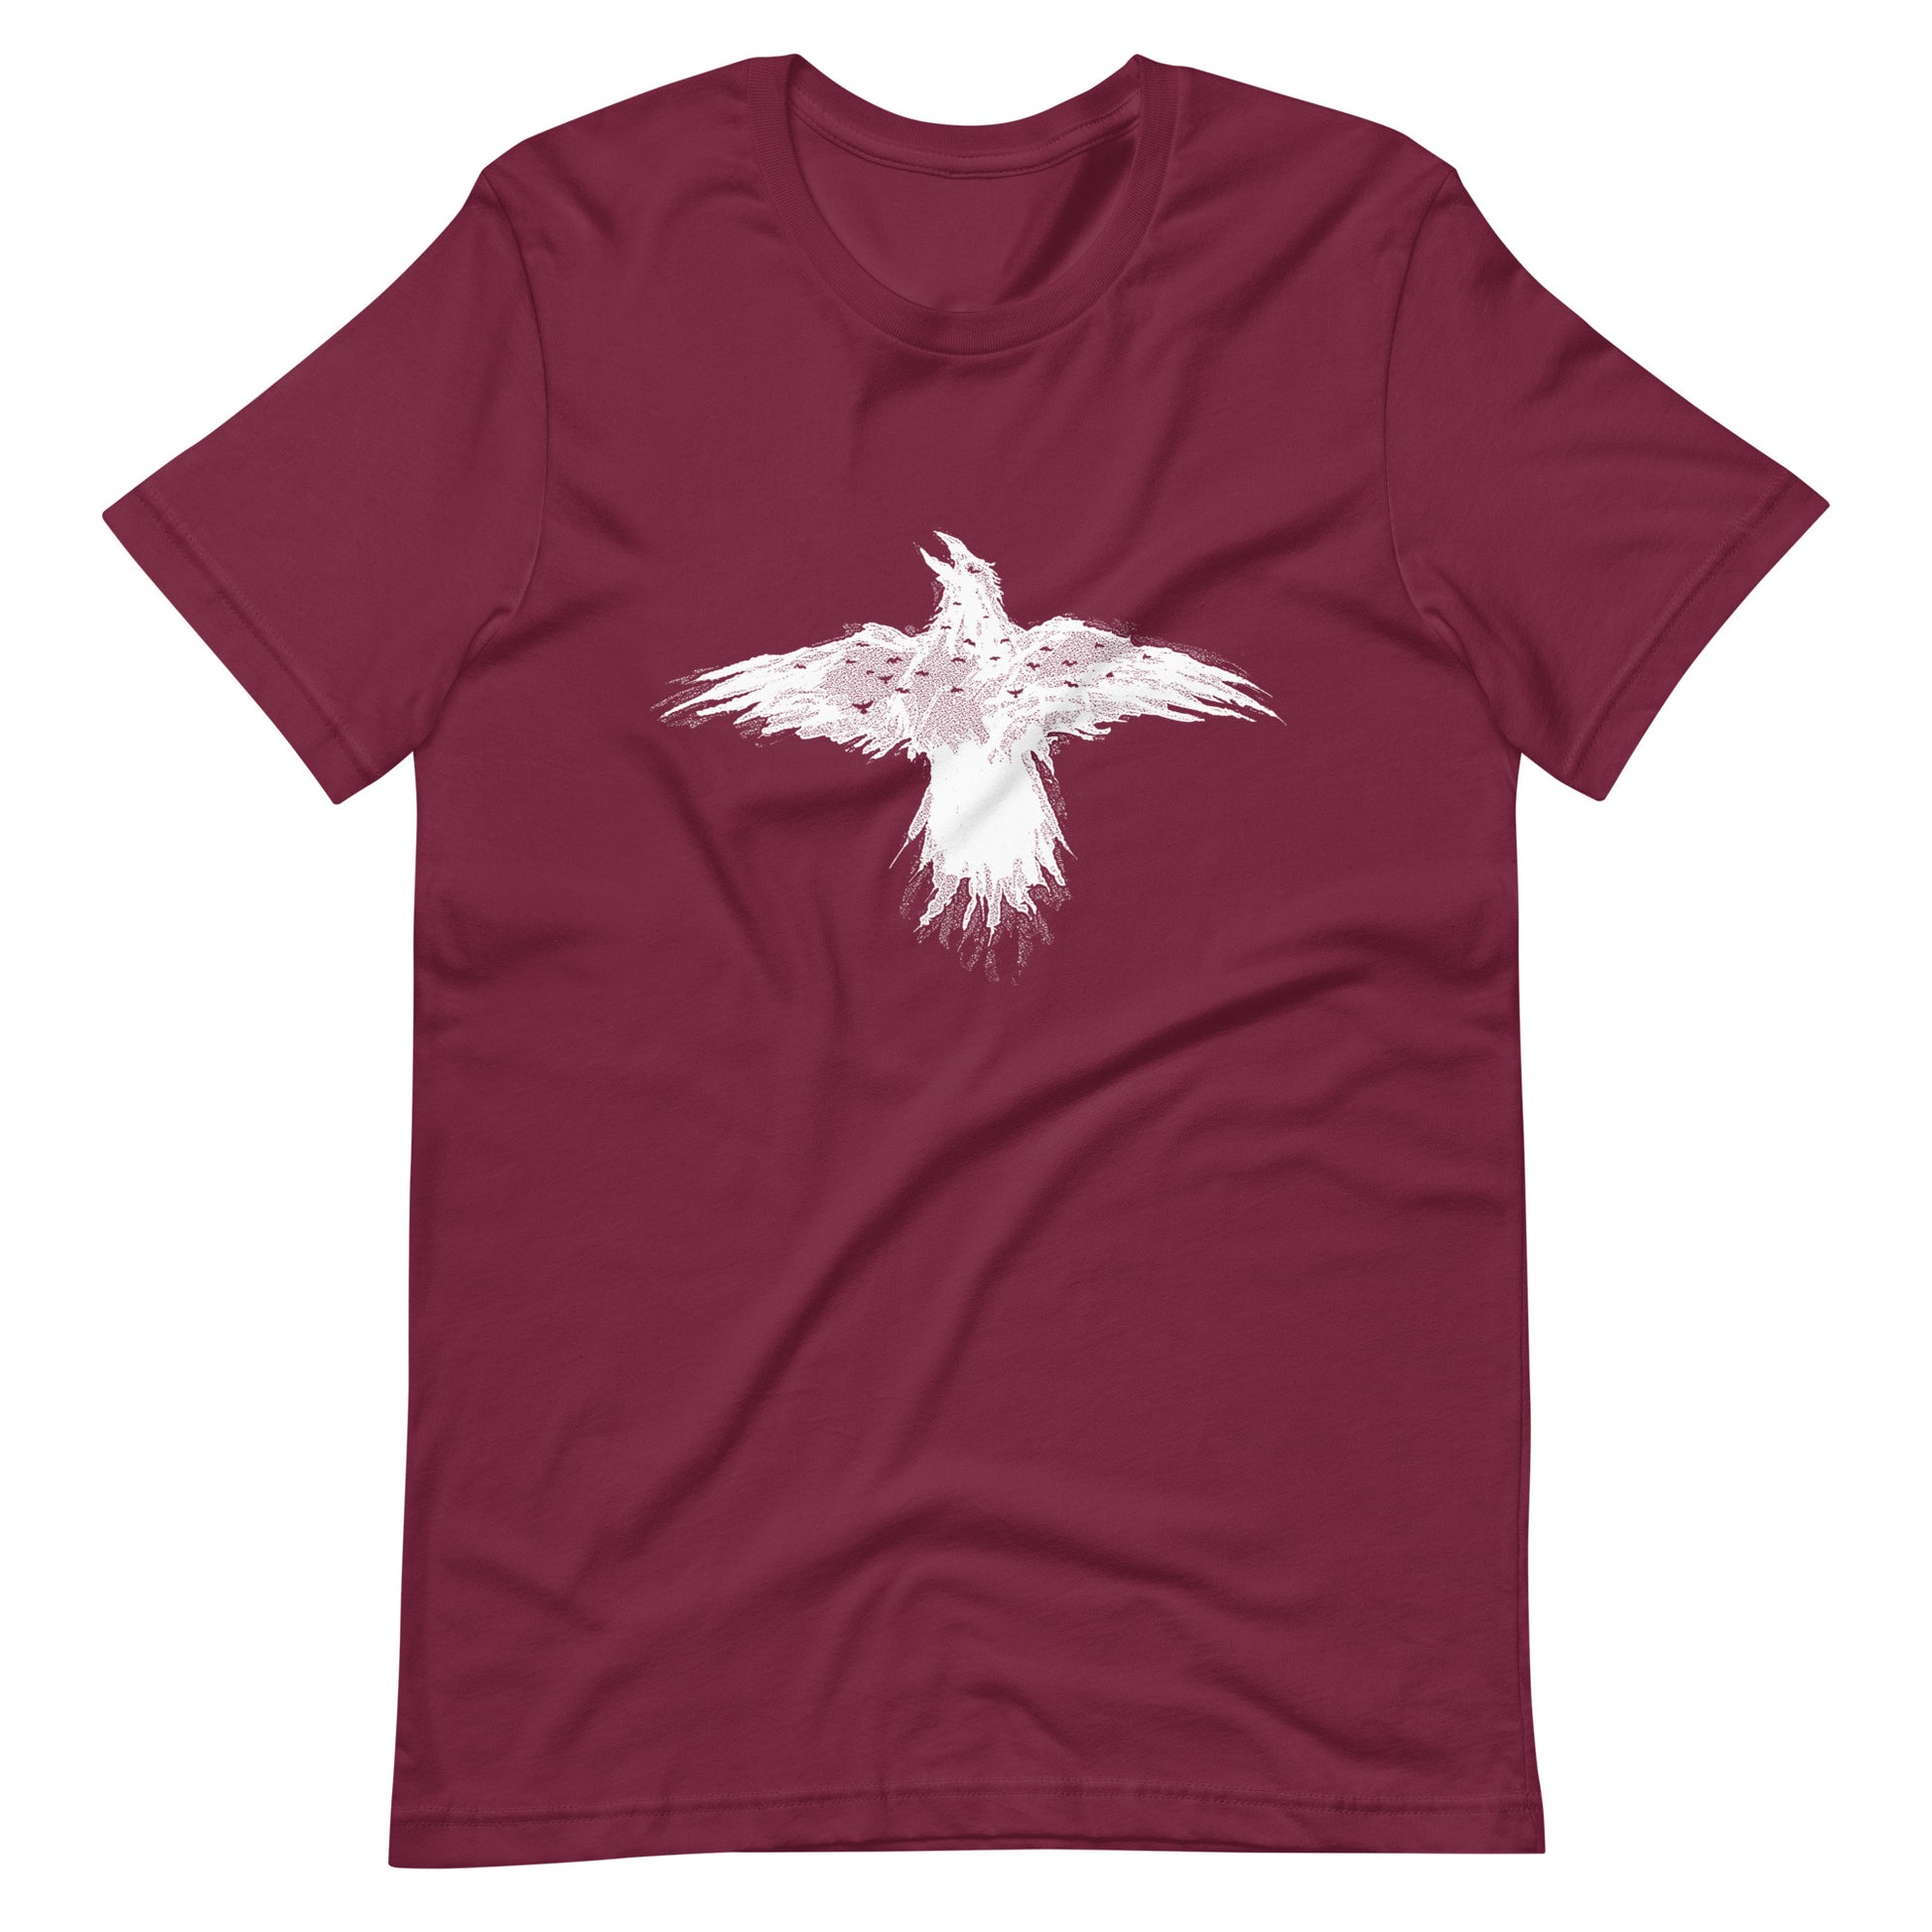 Flying Crow - Men's t-shirt - Maroon Front